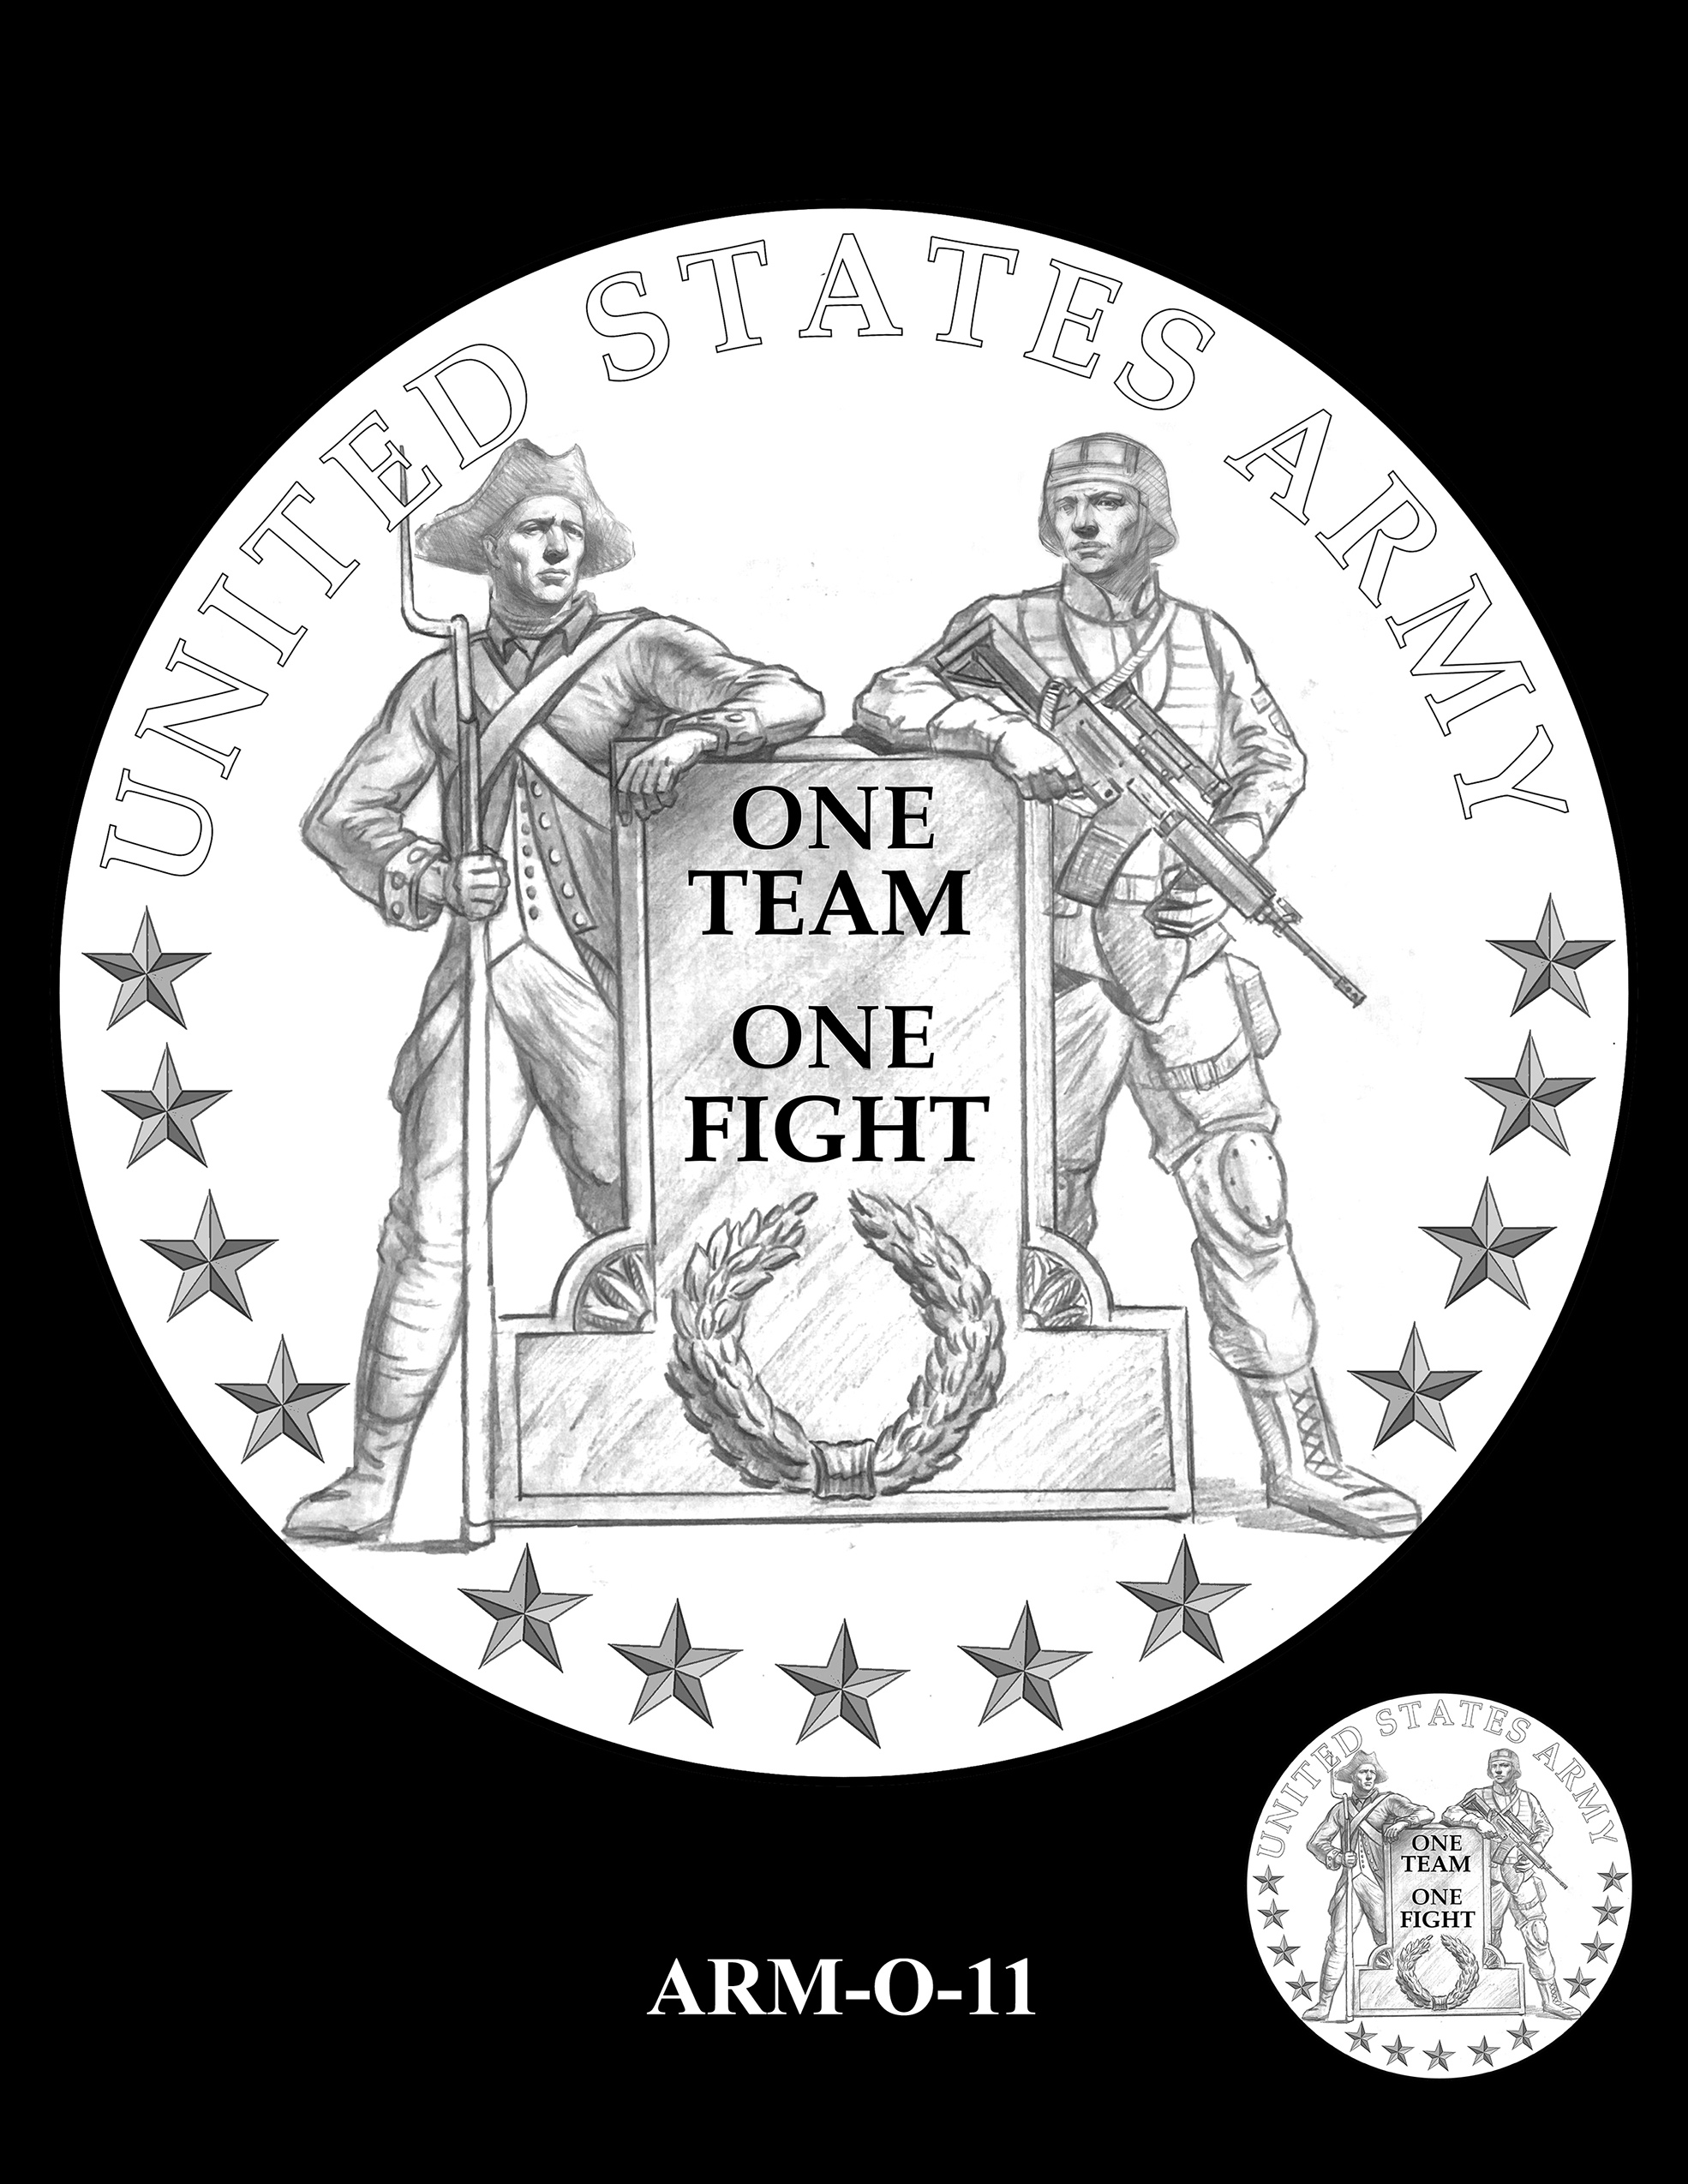 ARM-O-11 -- United States Army Silver Medal